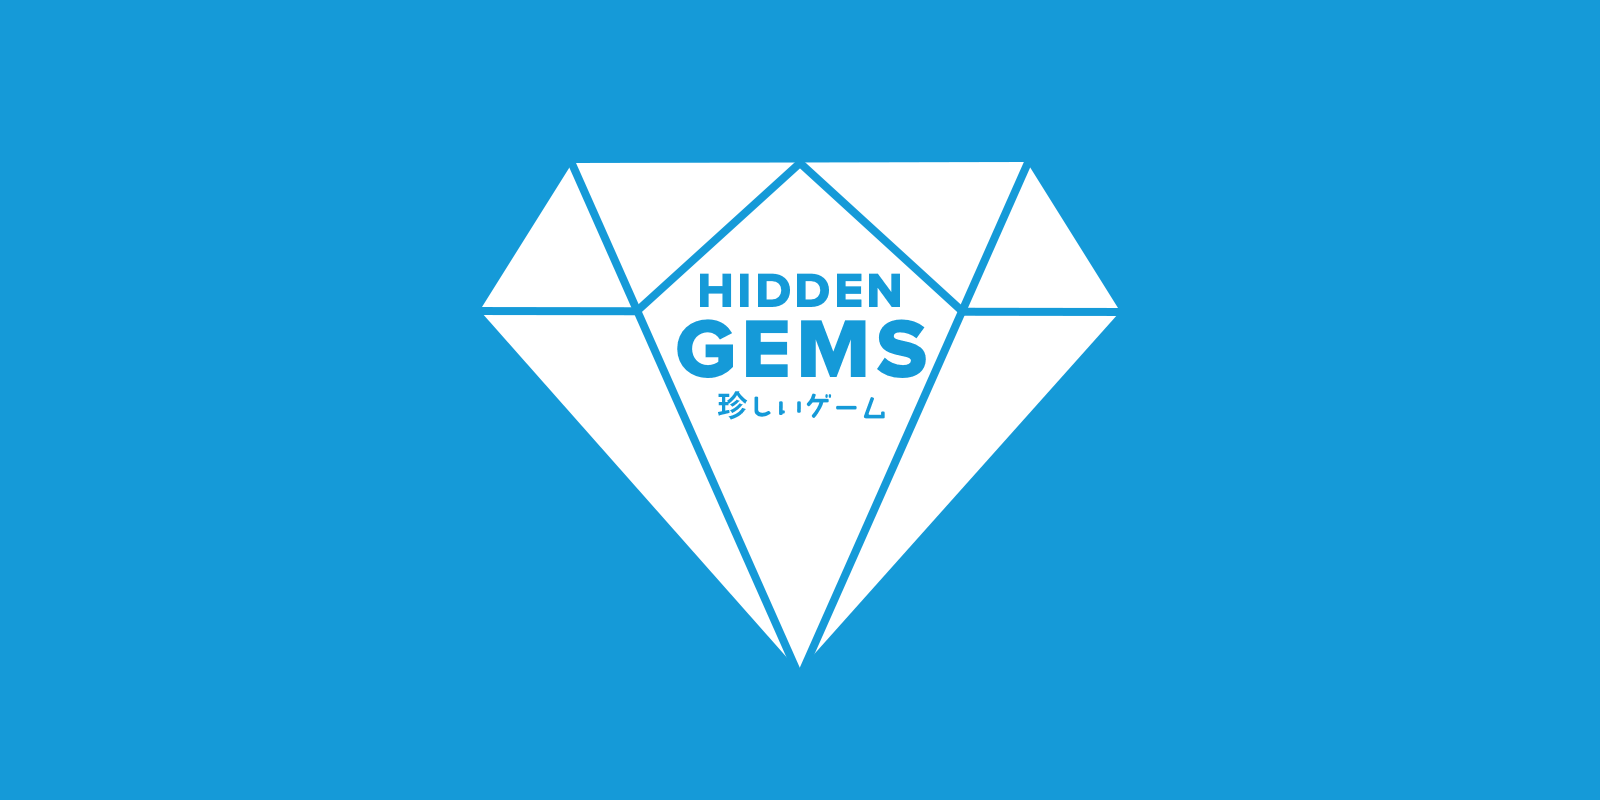 Hidden Gems of Game Design: Volume 9